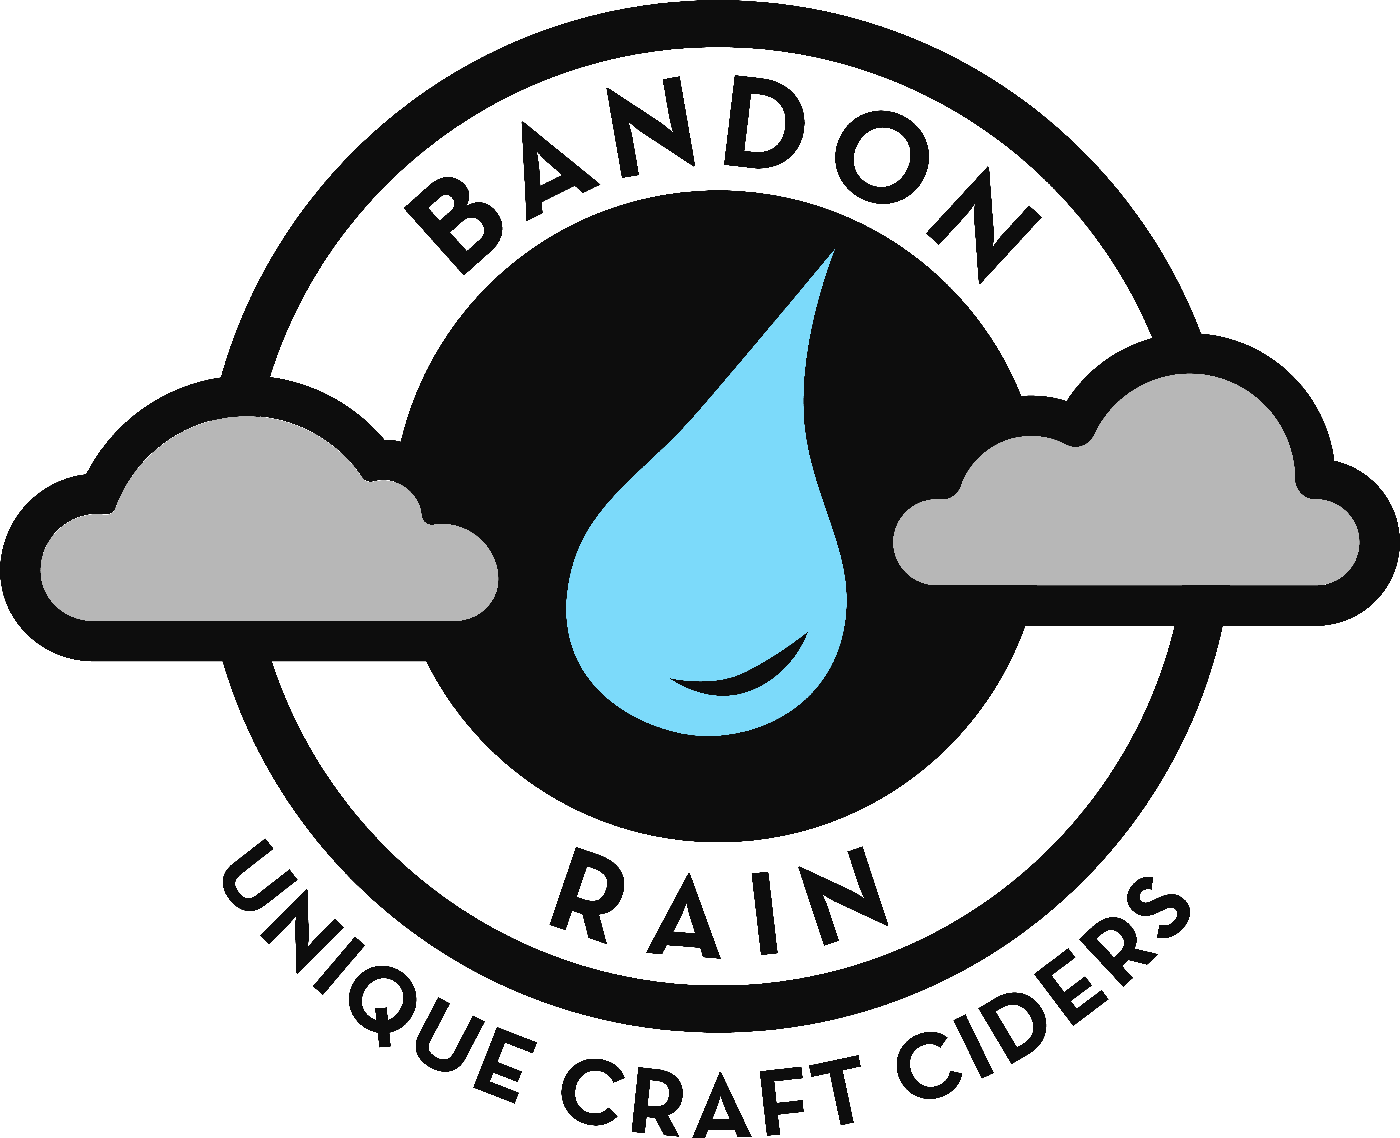 Bandon Logo - Bandon Rain Cider Co - Unique Craft Ciders